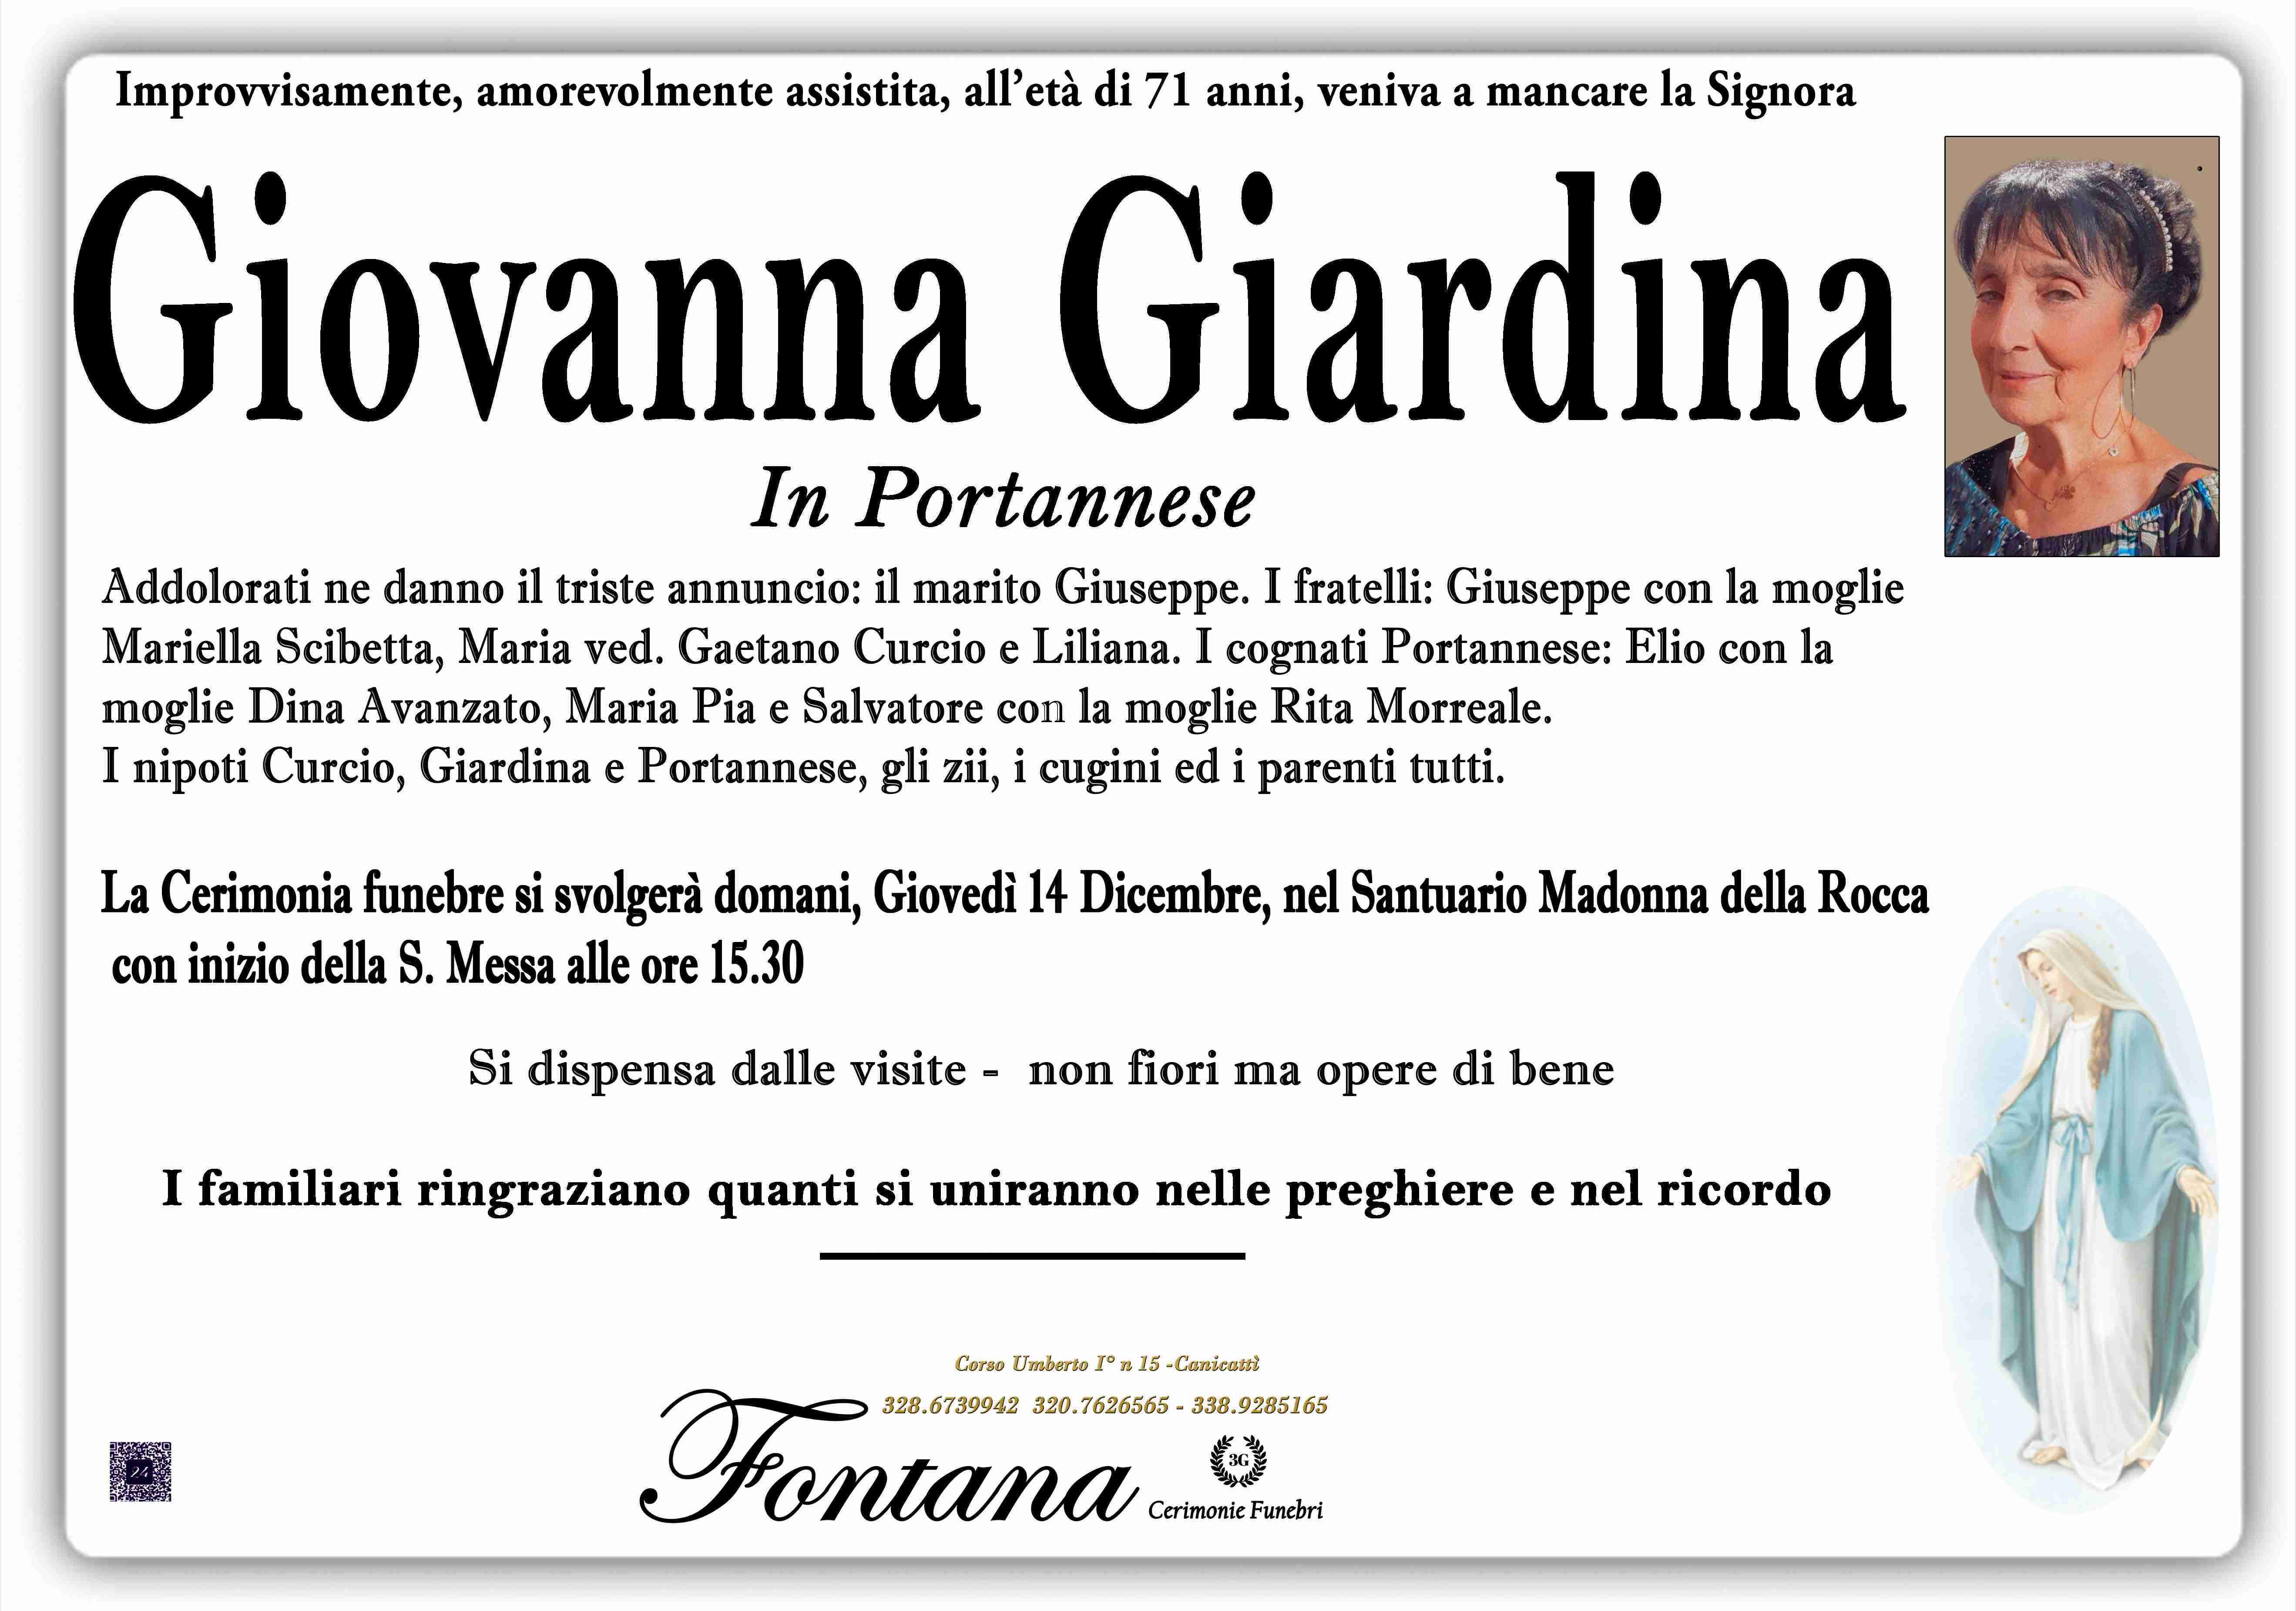 Giovanna Giardina